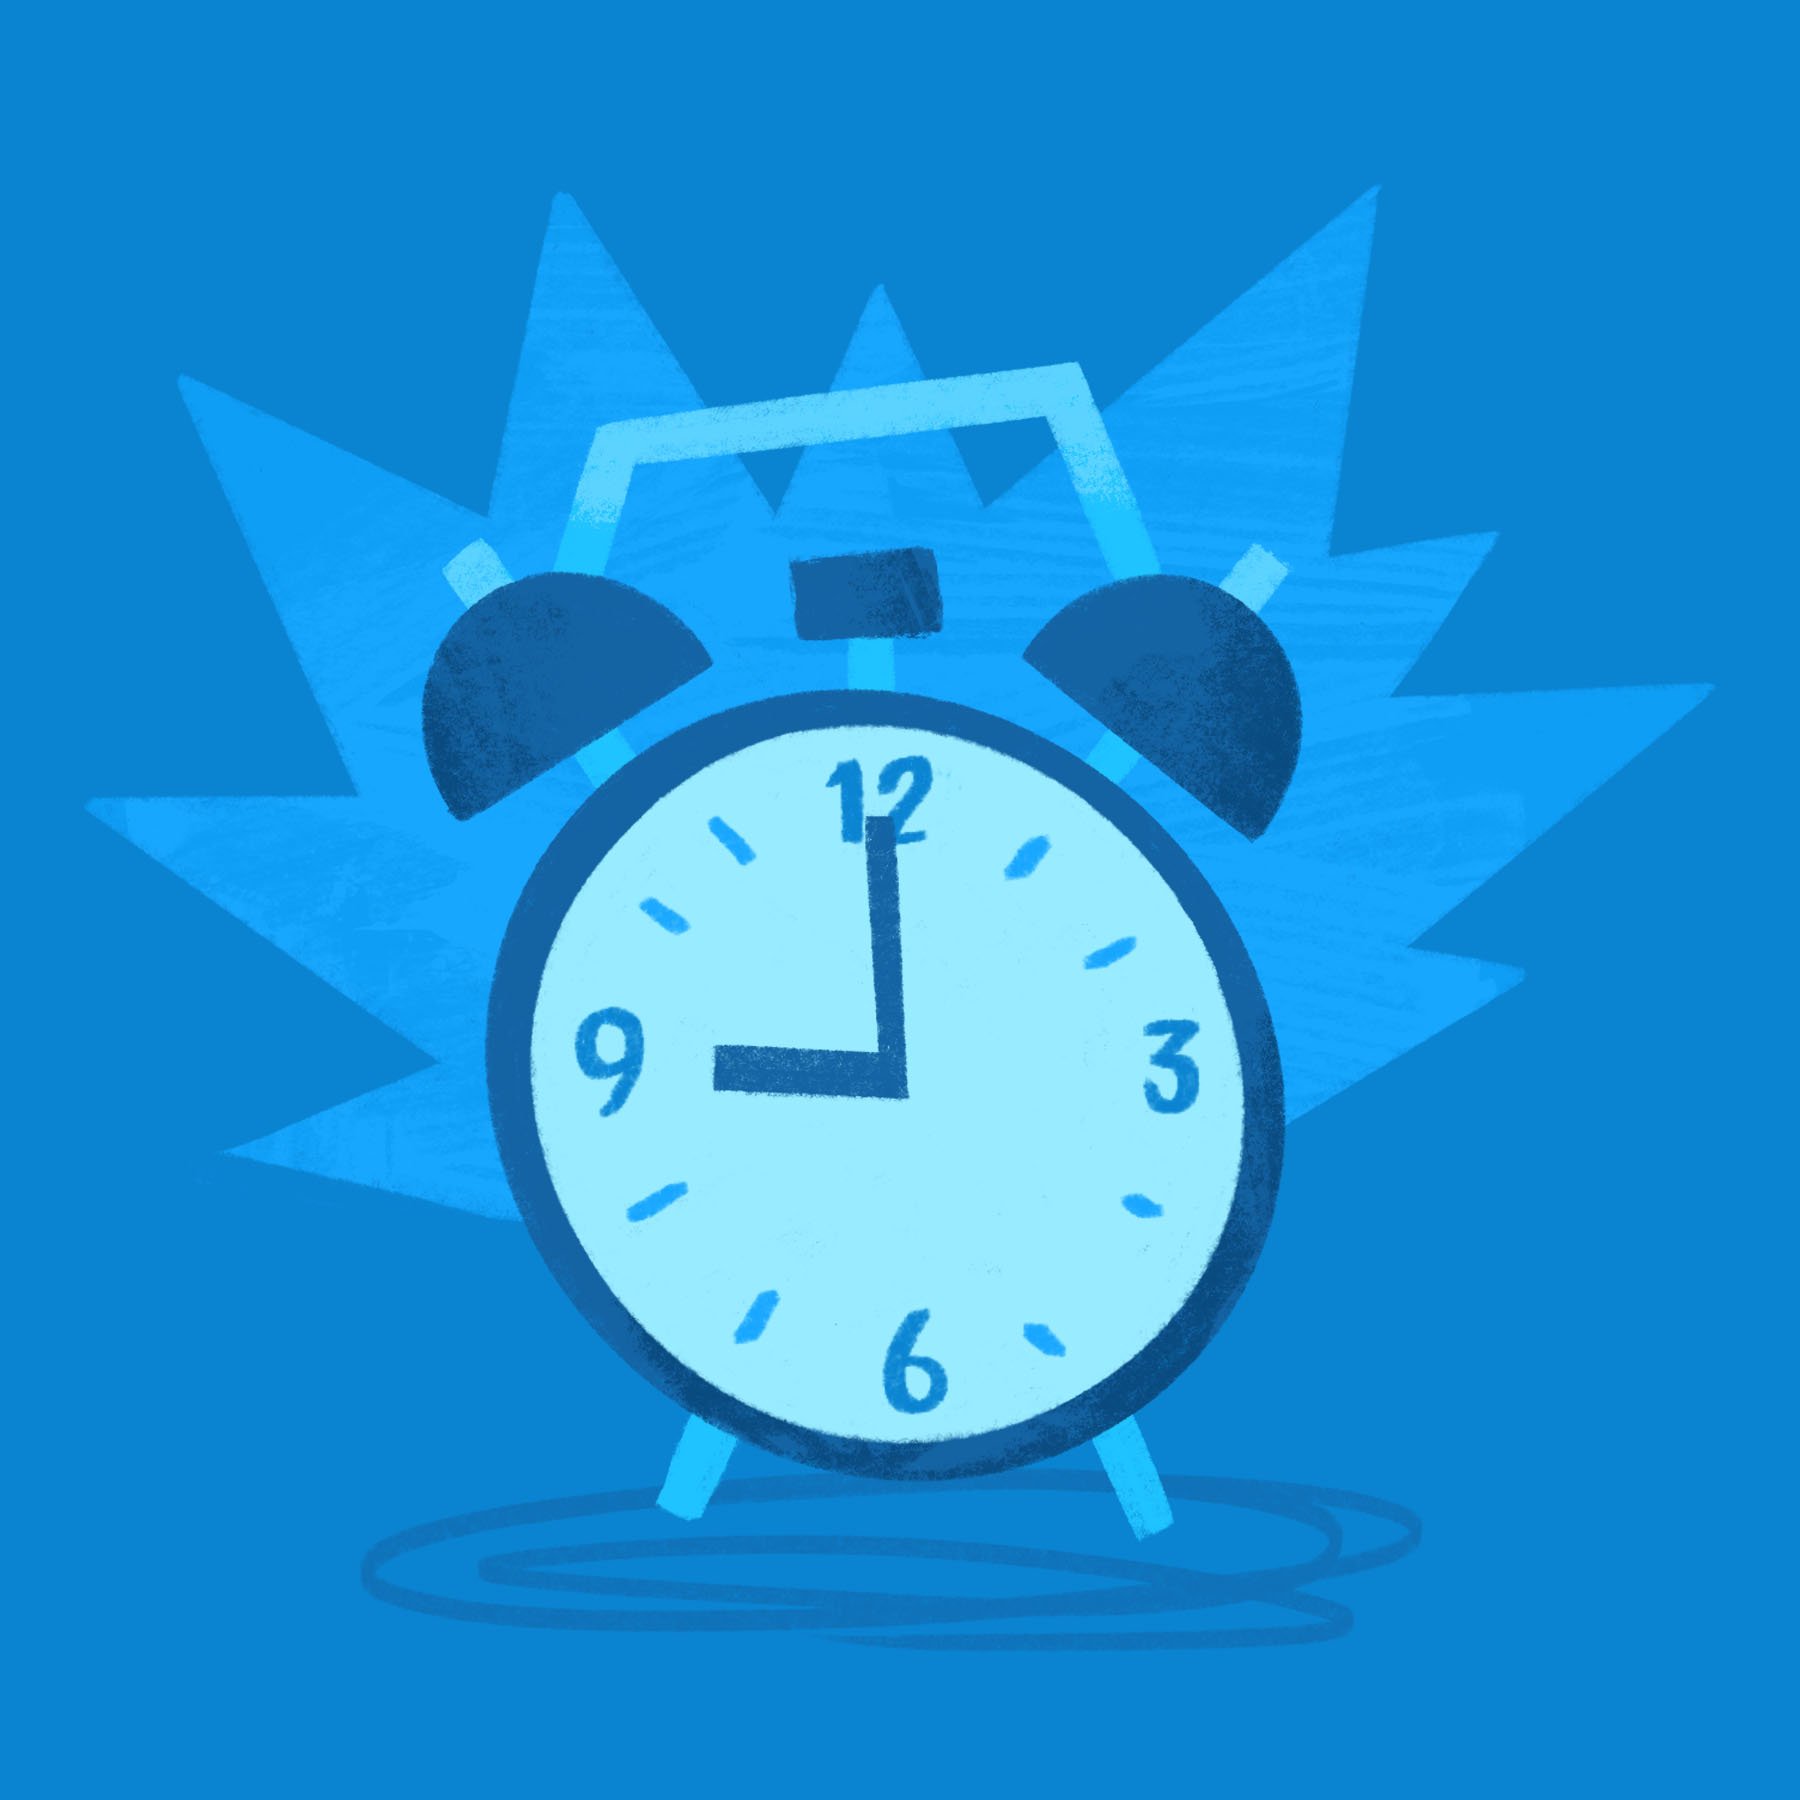 Alarm_Clock_-_Option_2_-_Blue copy.jpg